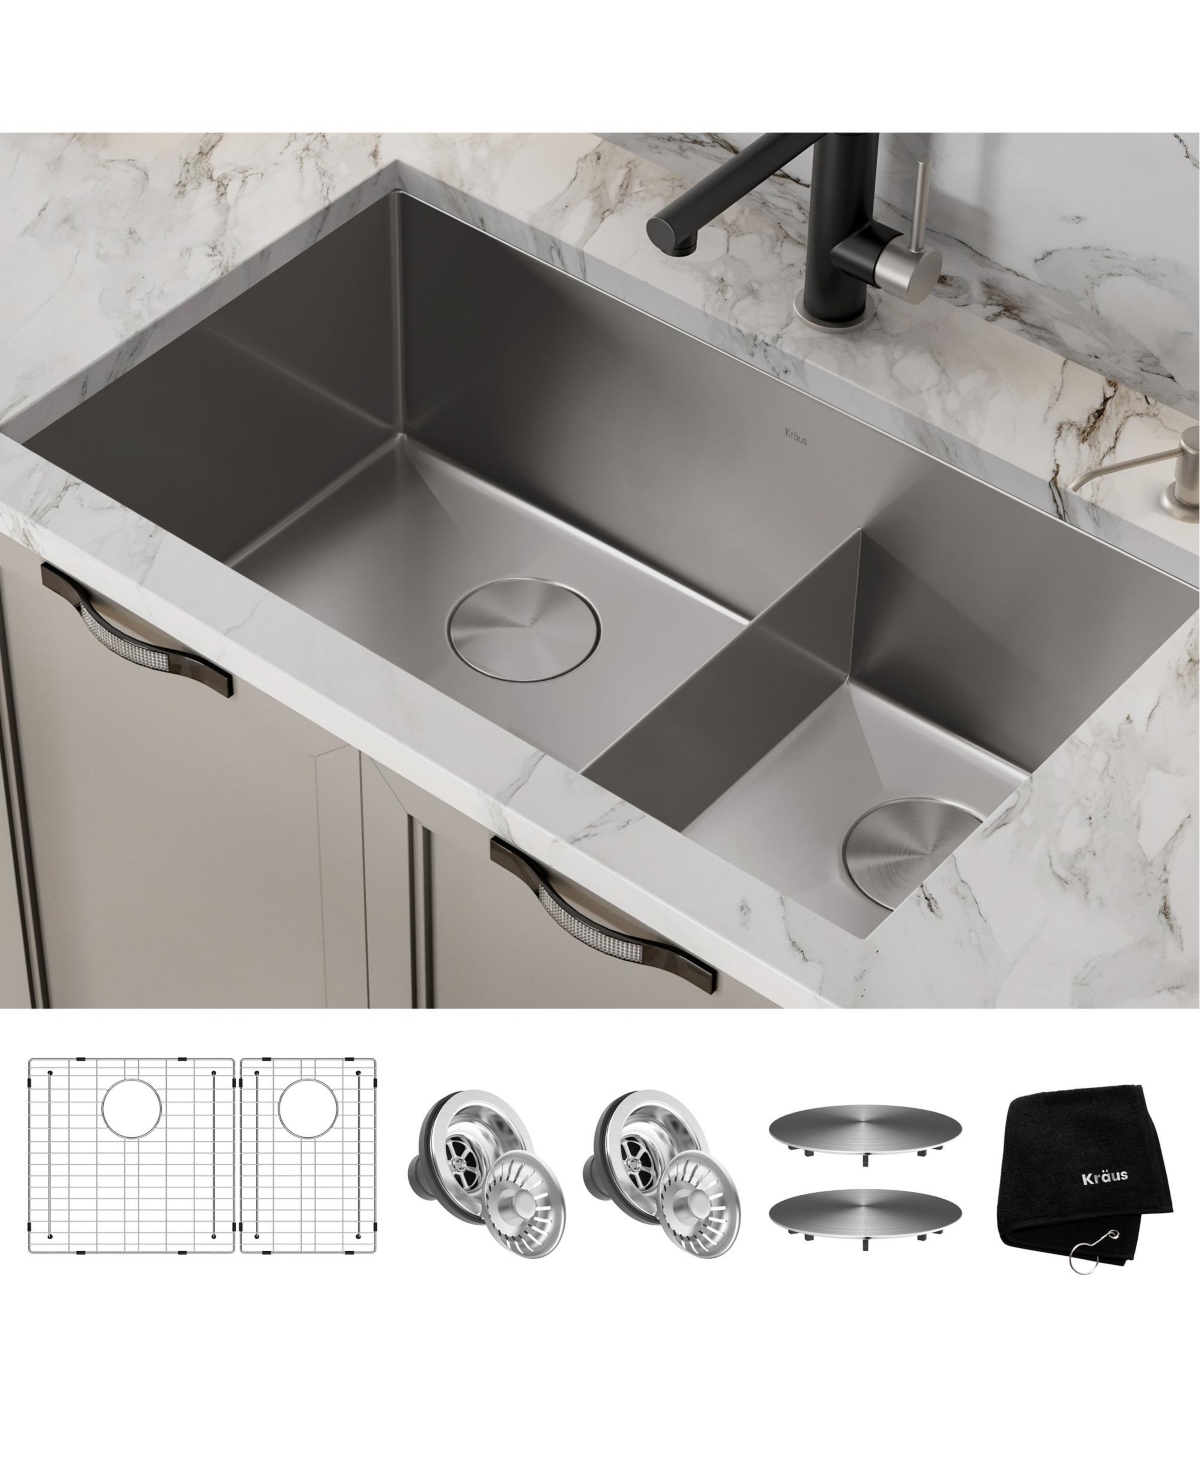 Standart Pro 32 in. 16 Gauge Undermount 60/40 Double Bowl Stainless Steel Kitchen Sink - Stainless steel